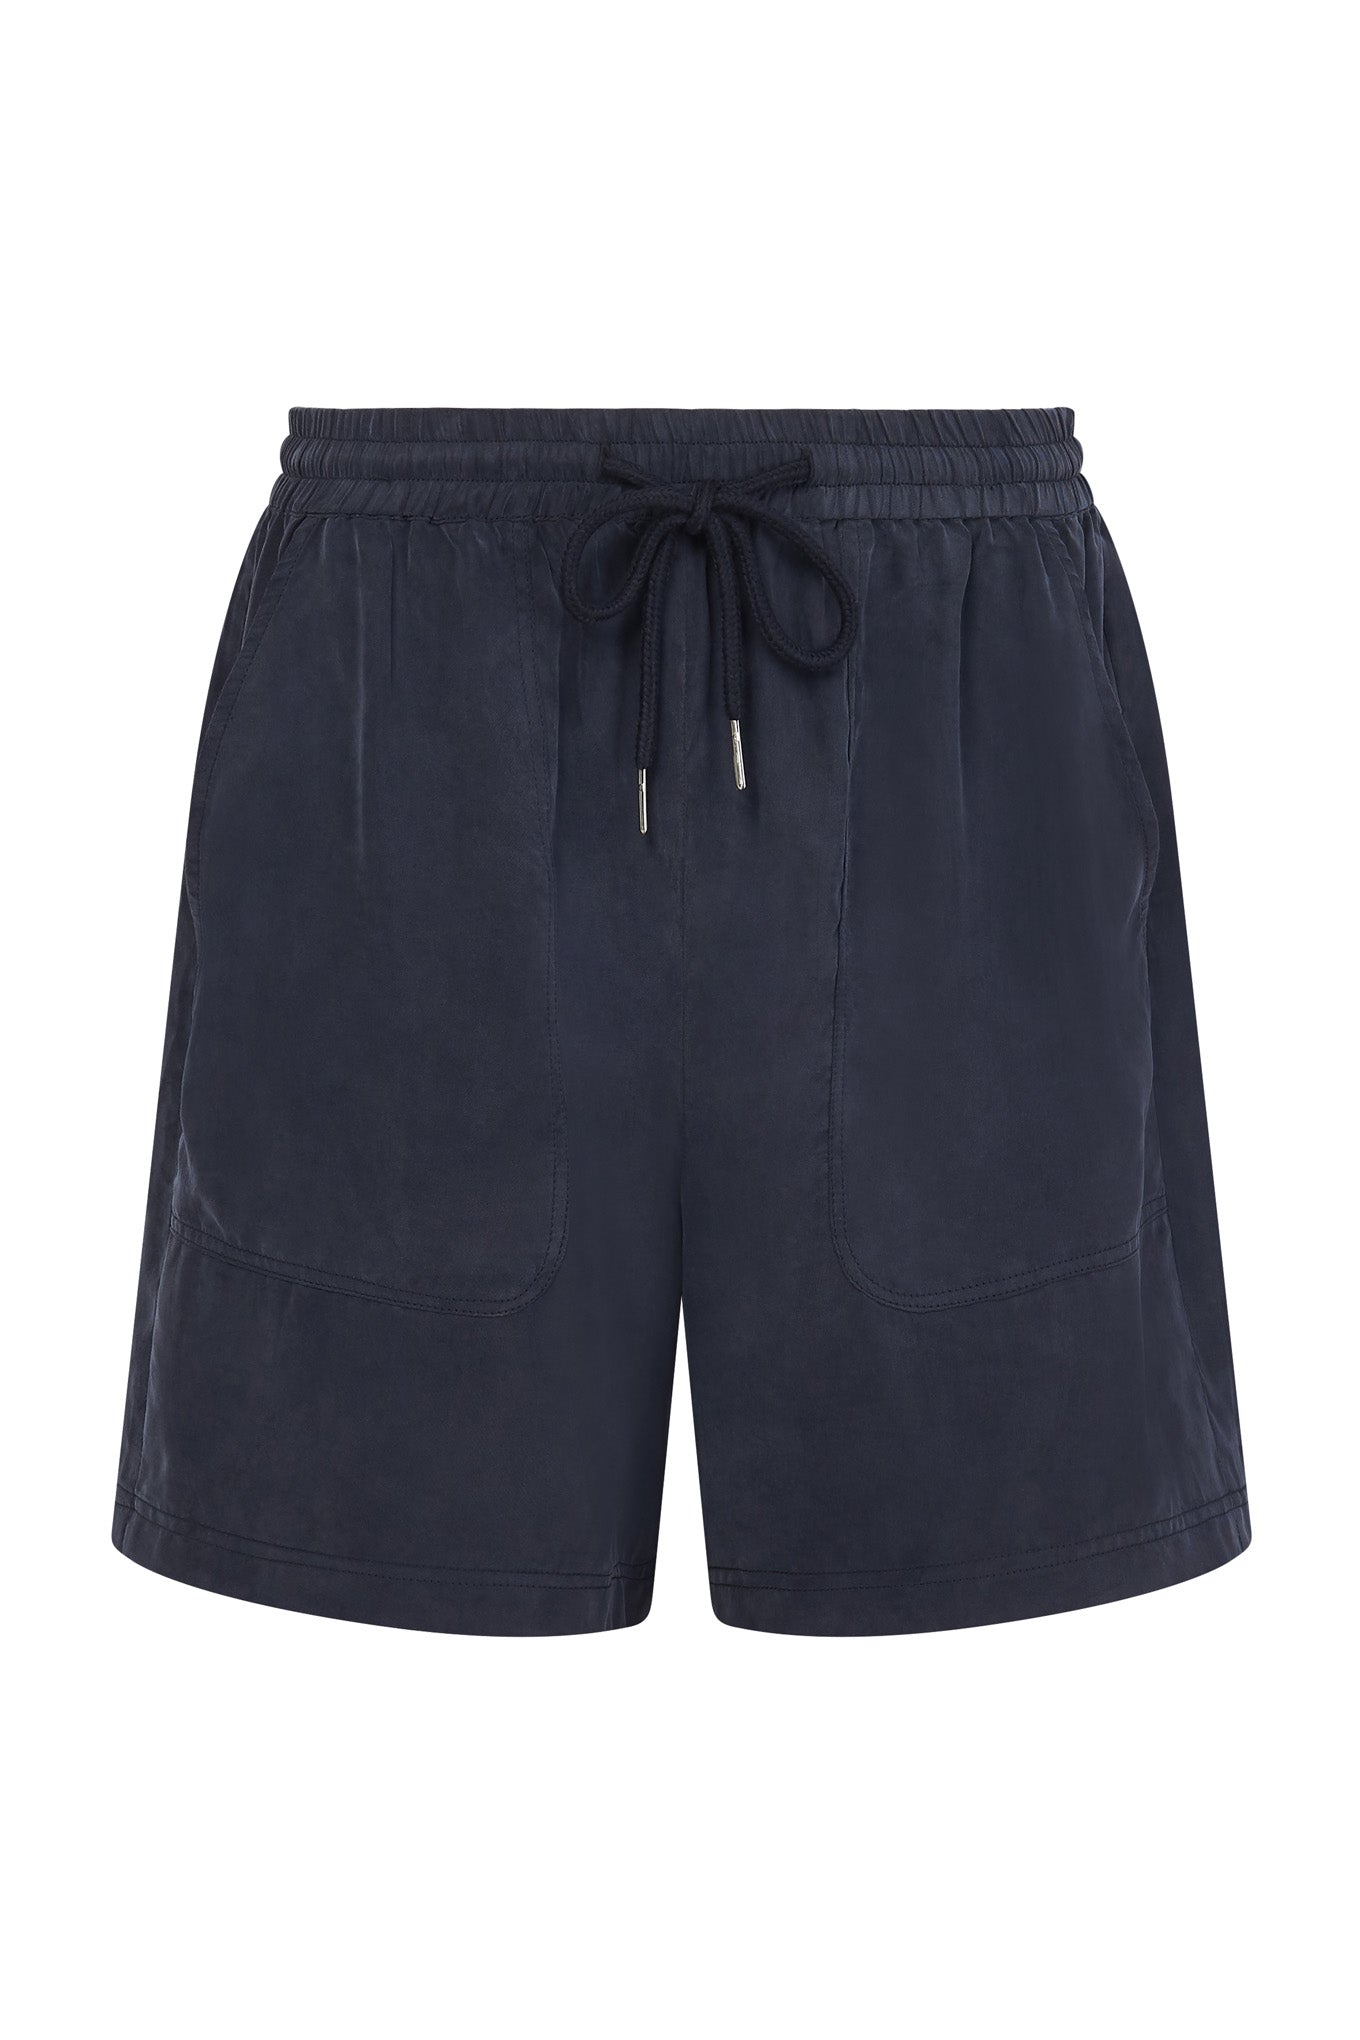 Dark blue shorts HOLLY made of cupro and Lenzing from Komodo